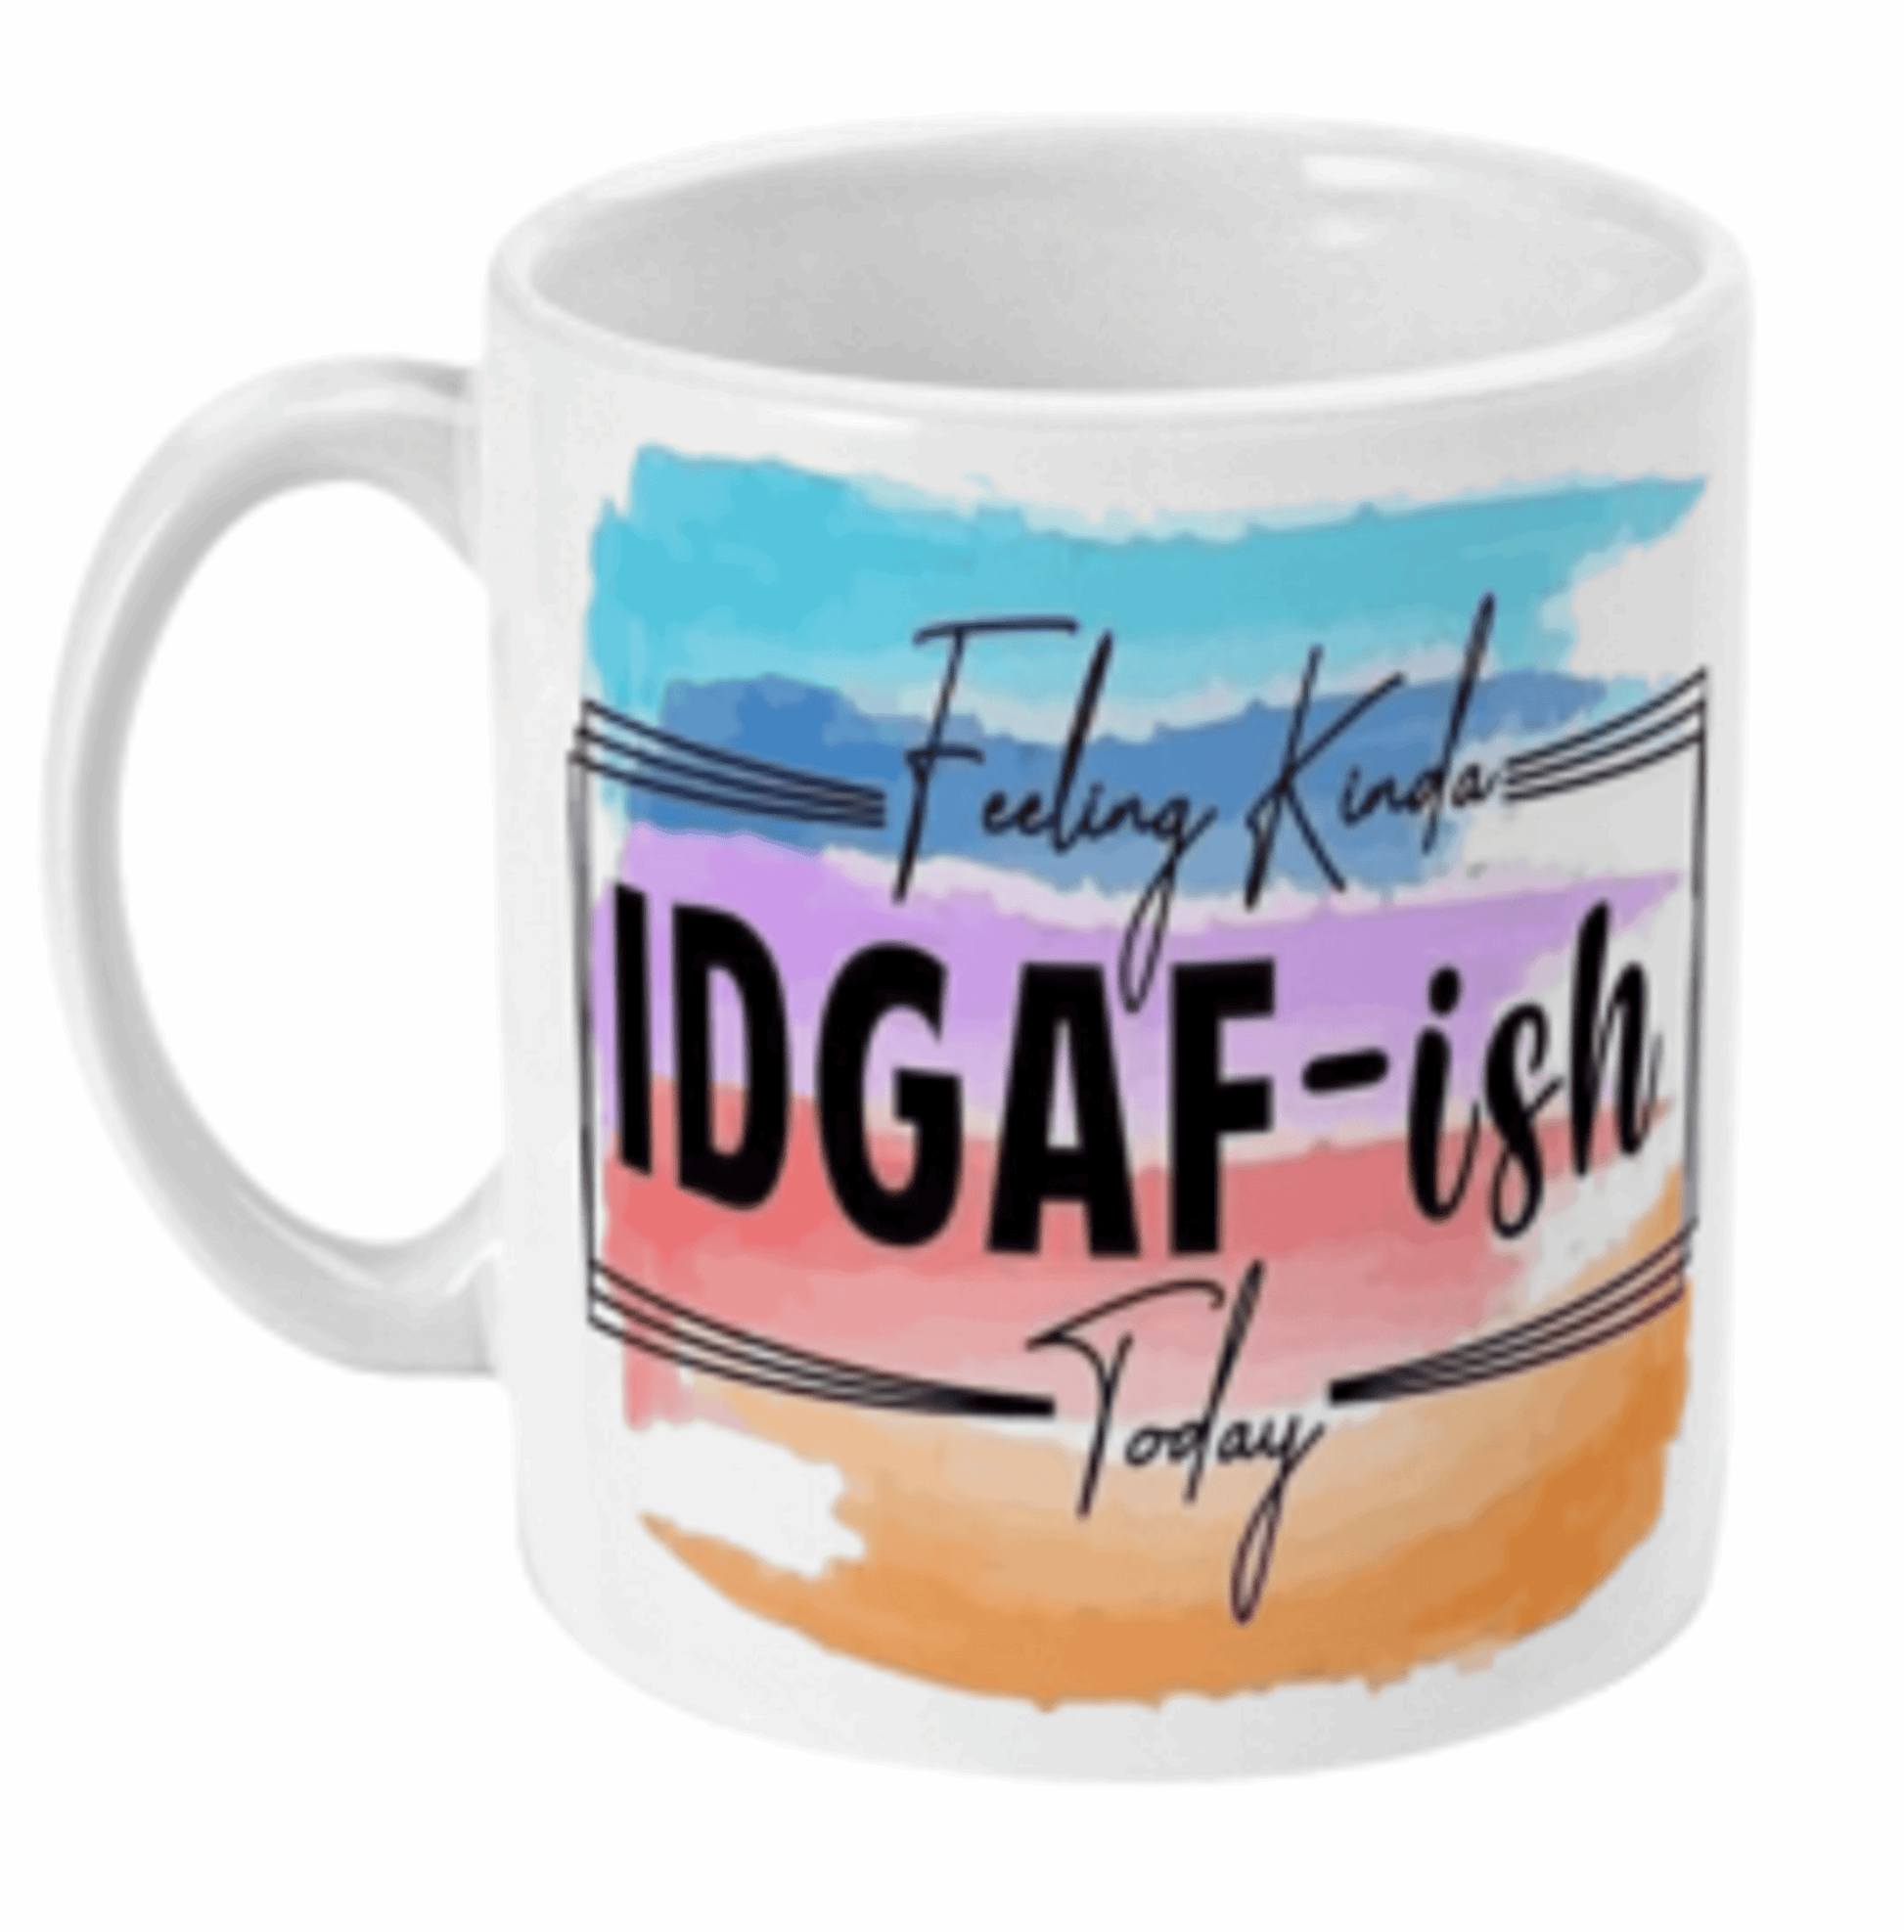  Feeling Kinda IDGAF-ish Coffee Mug by Free Spirit Accessories sold by Free Spirit Accessories